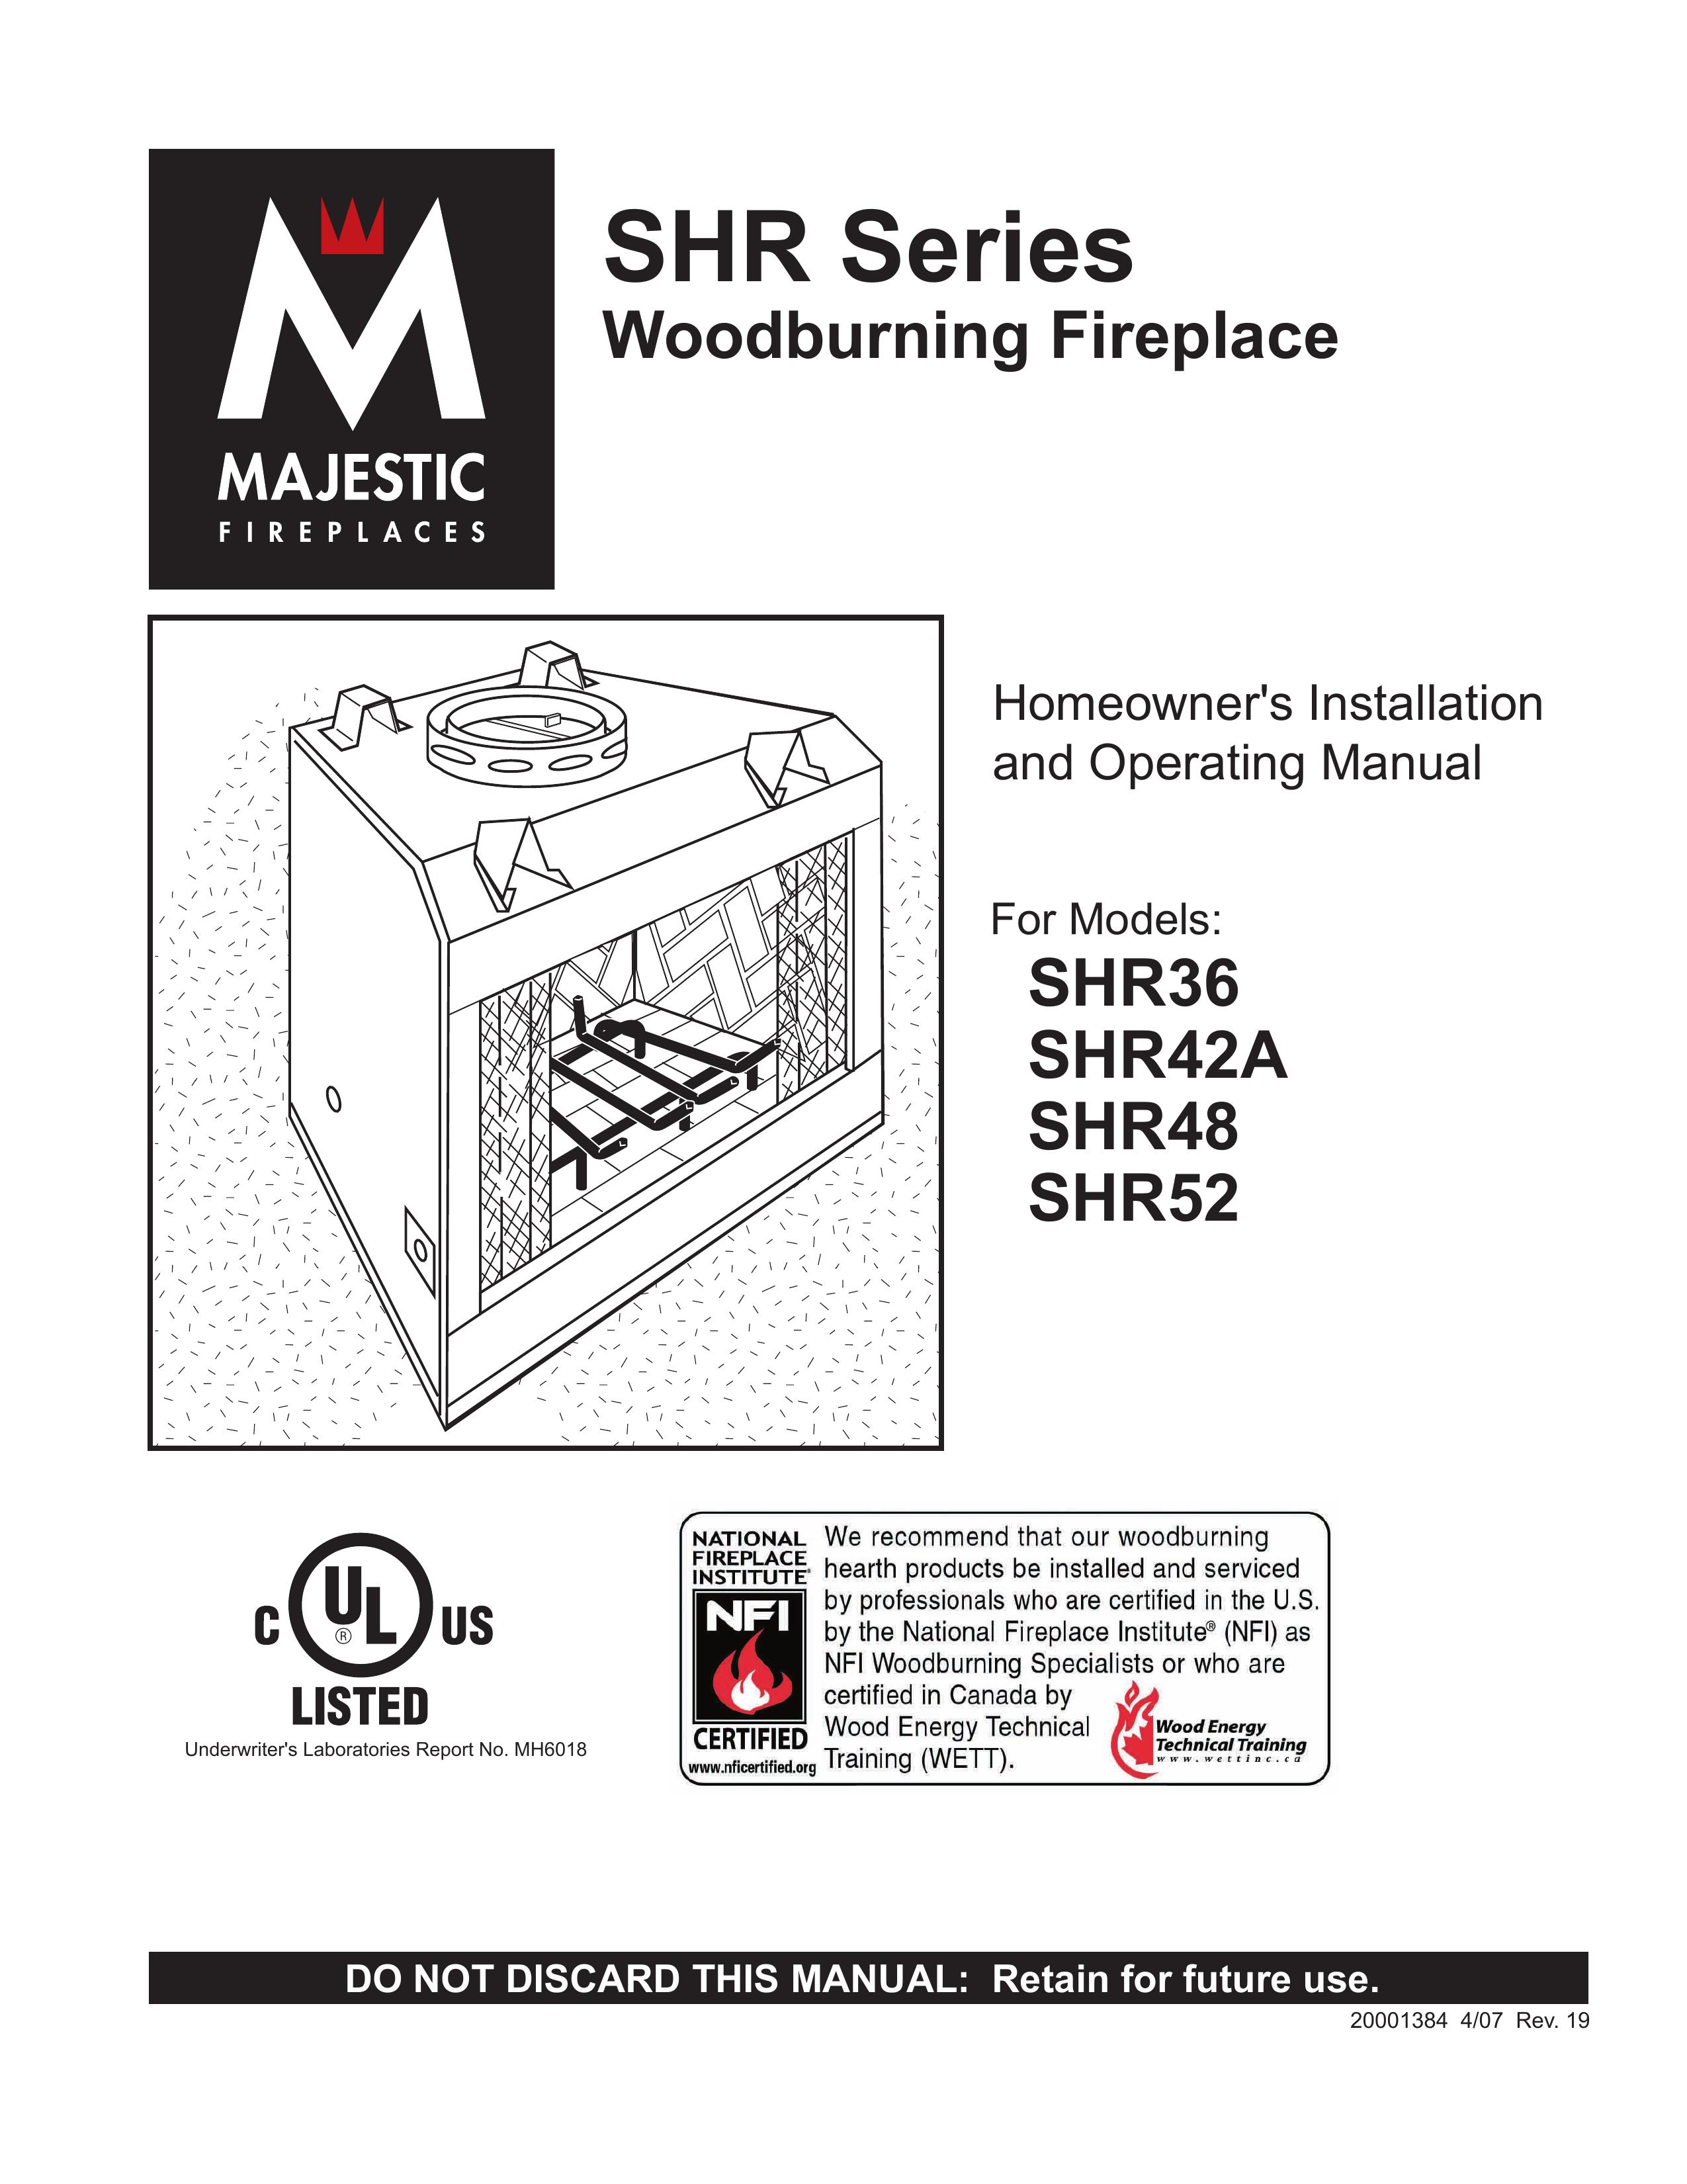 CFM Corporation SHR48 Outdoor Fireplace User Manual